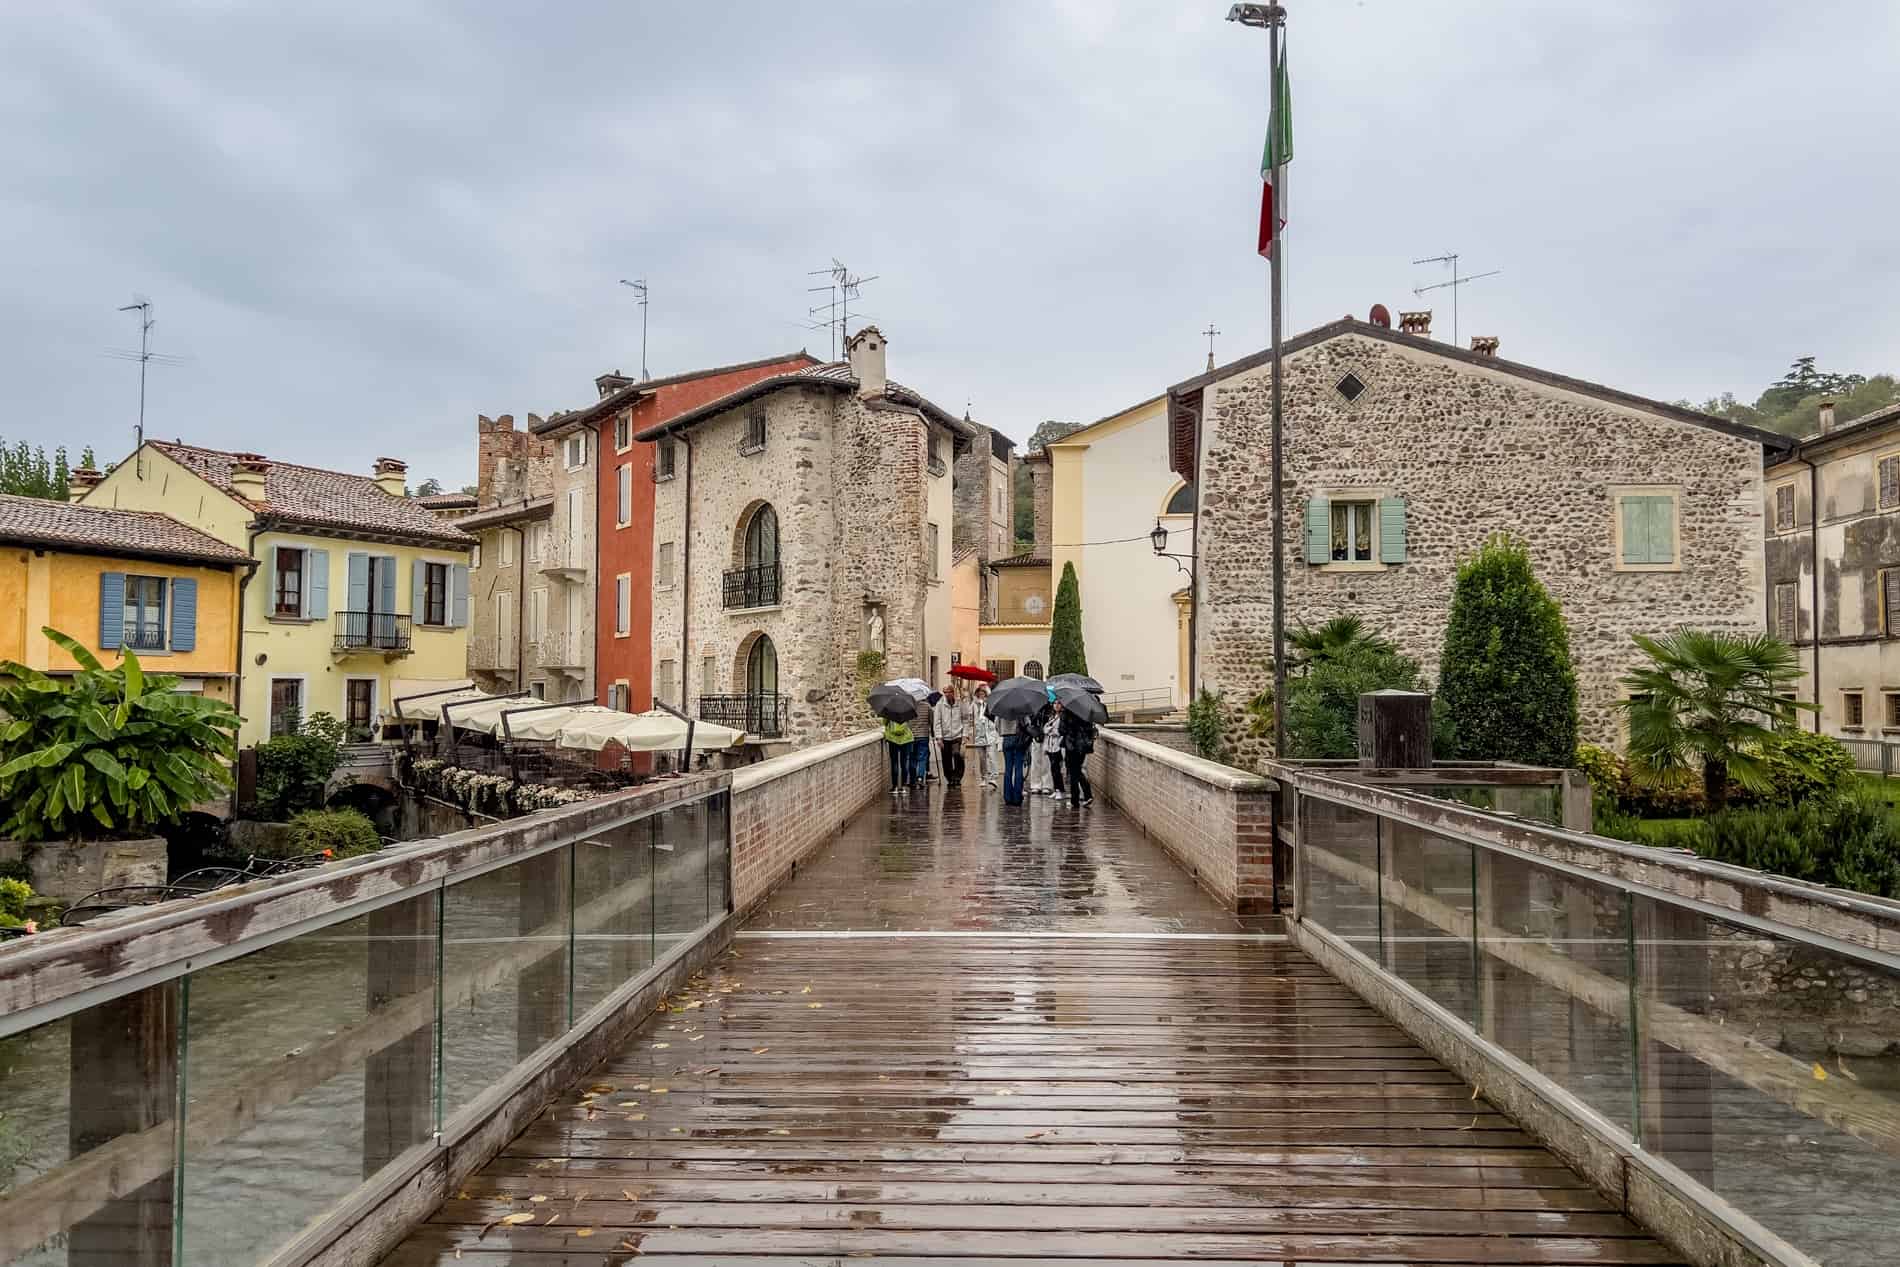 People with umbrellas walk across a wooden bridge towards the stone village houses of Borghetto Sul Mincio.